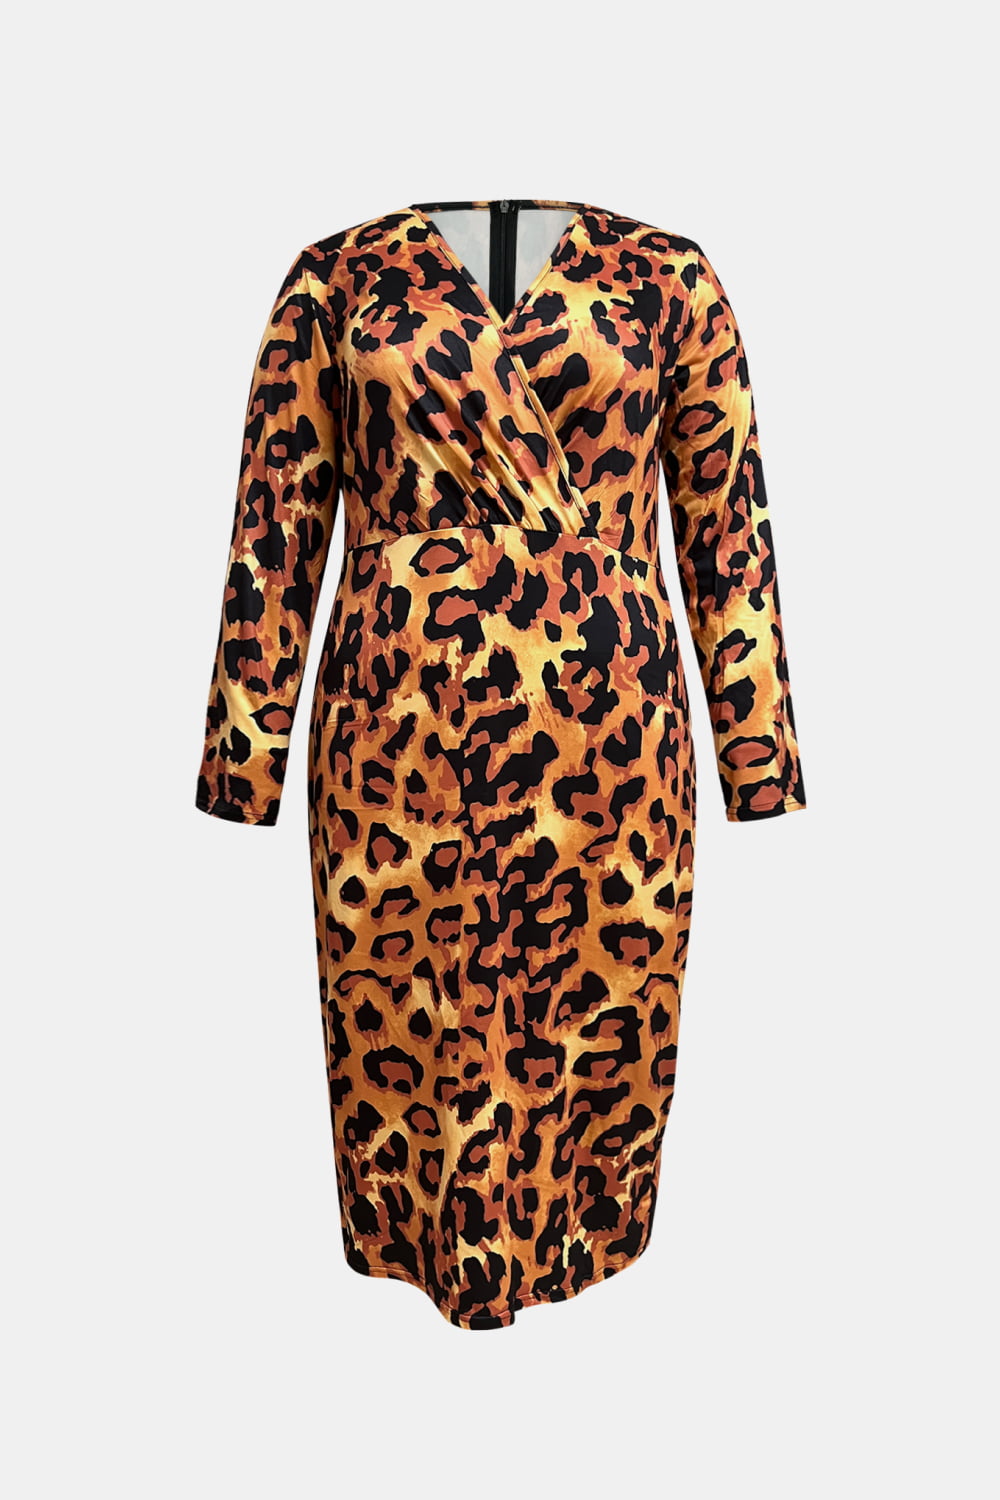 Surplice Neck Leopard Long Sleeve Dress - Cowtown Bling N Things